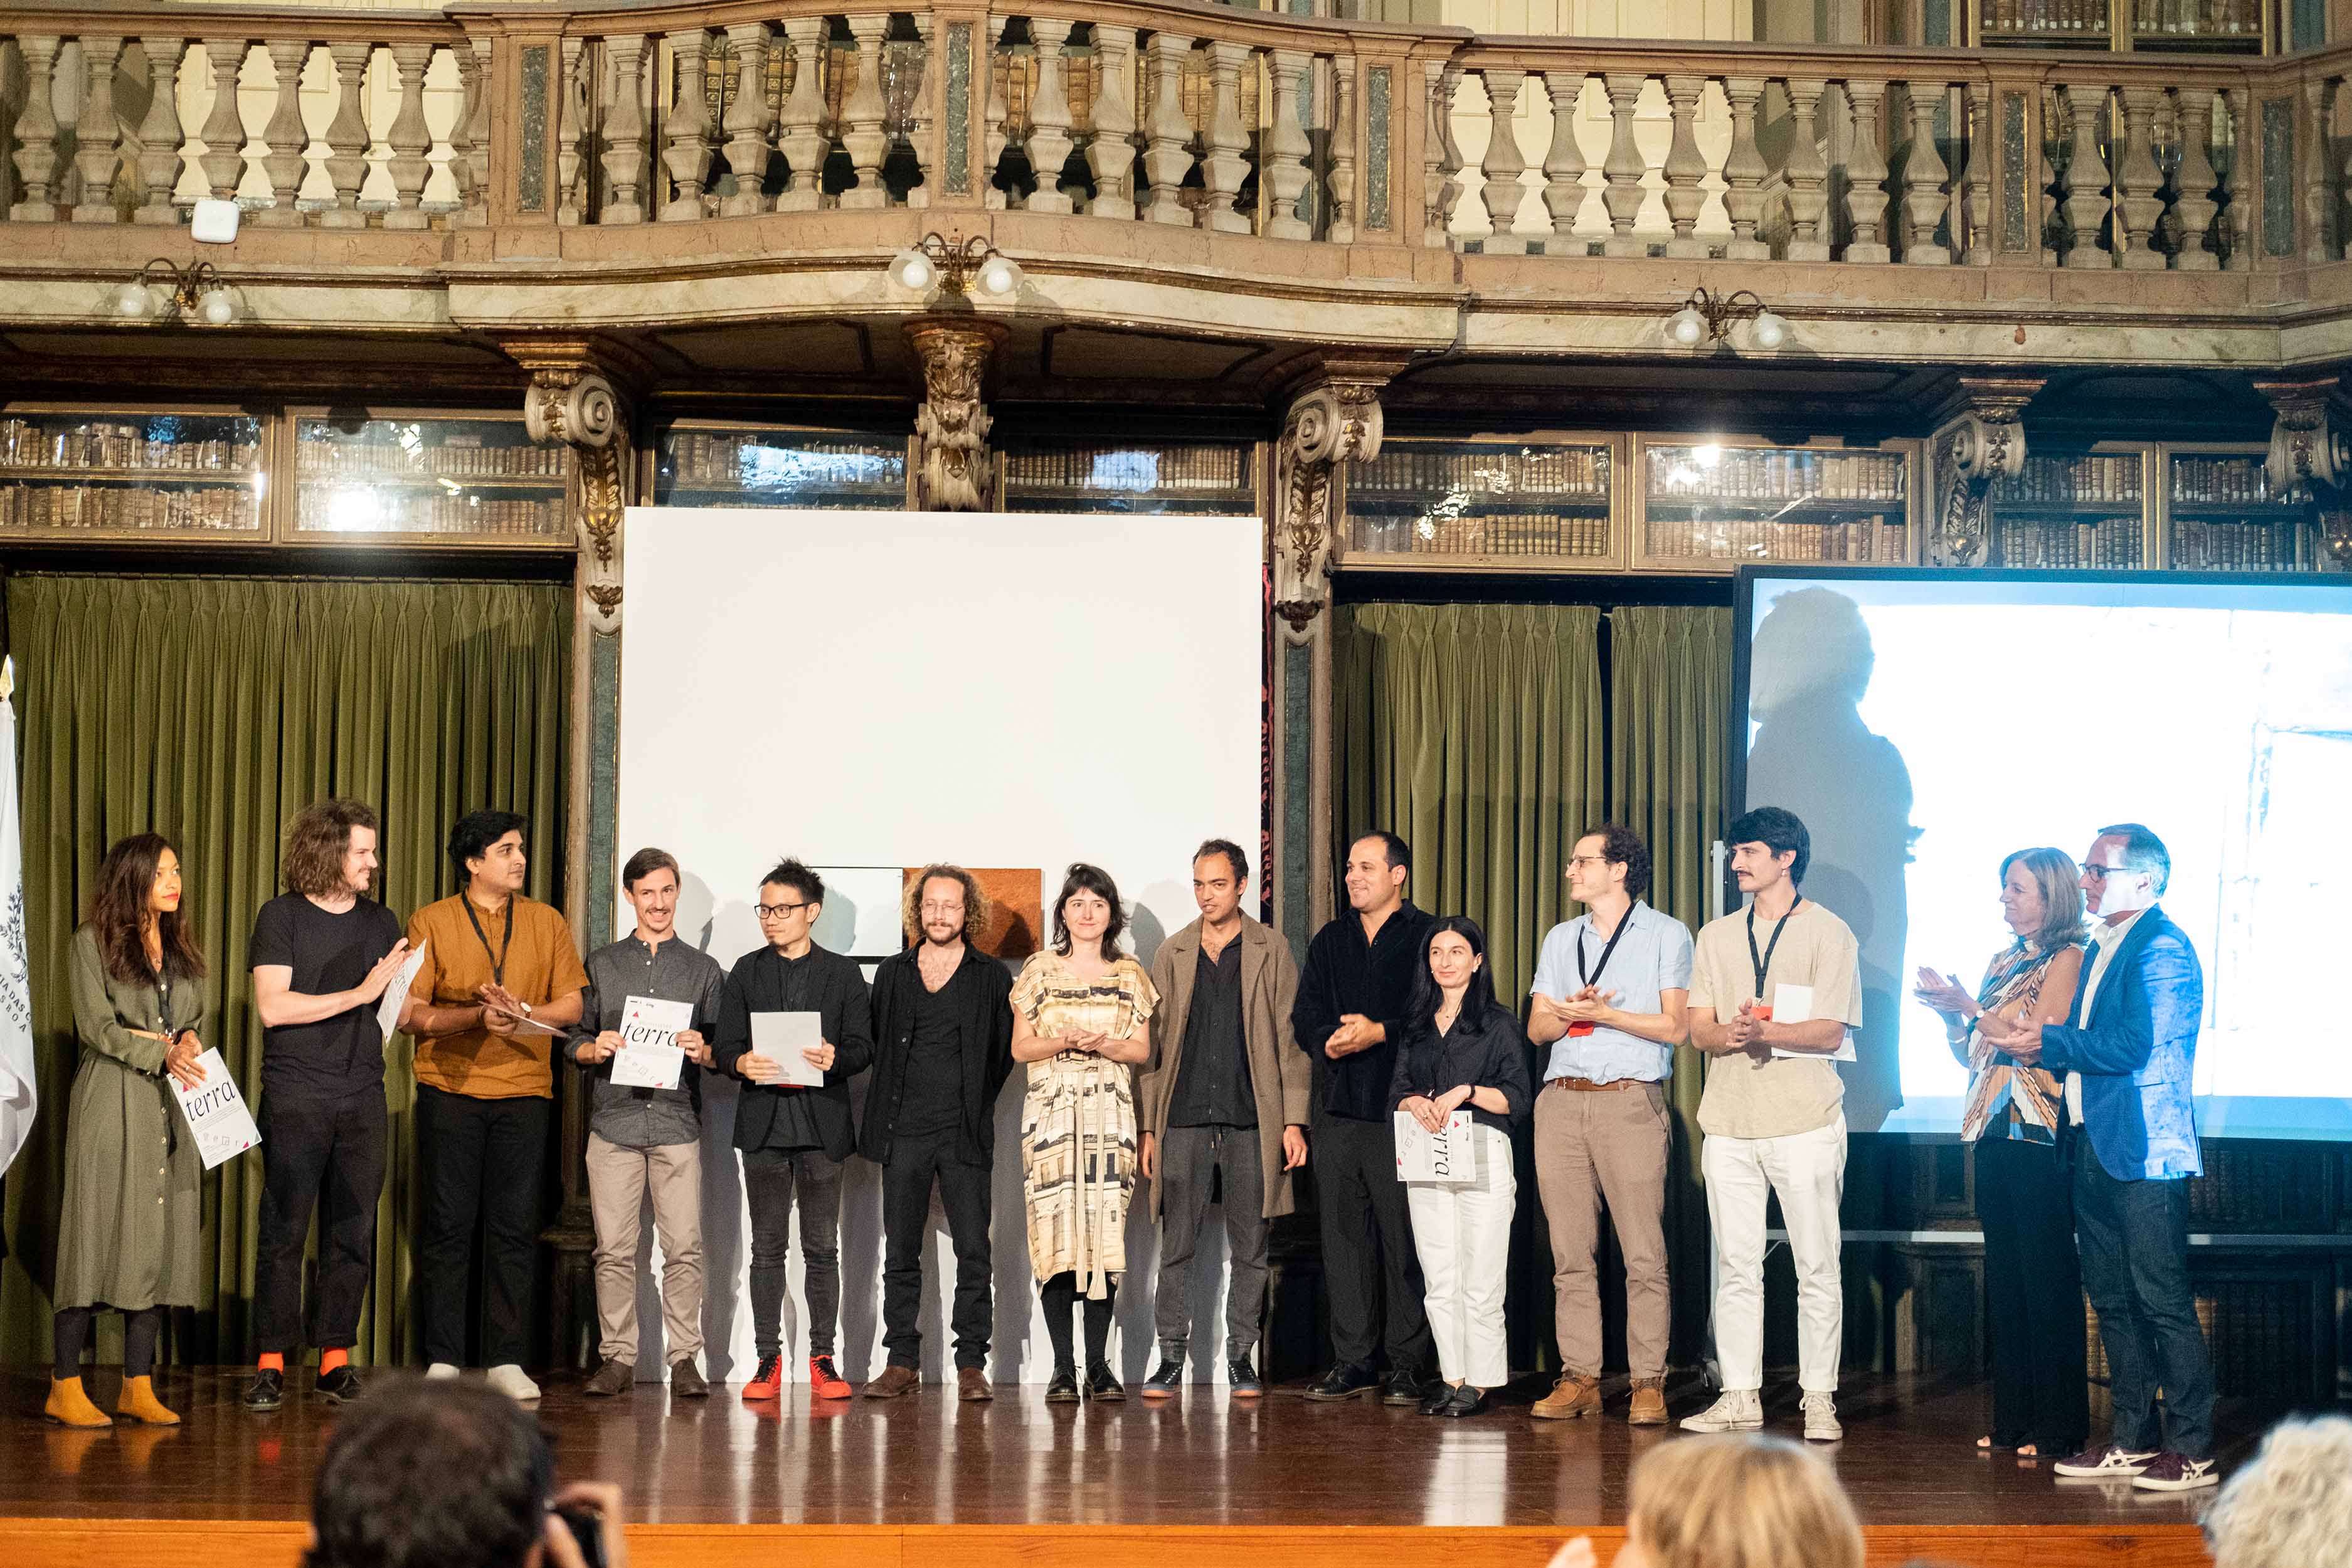 Shortlisted for Lisbon Triennale Millennium bcp Début Award